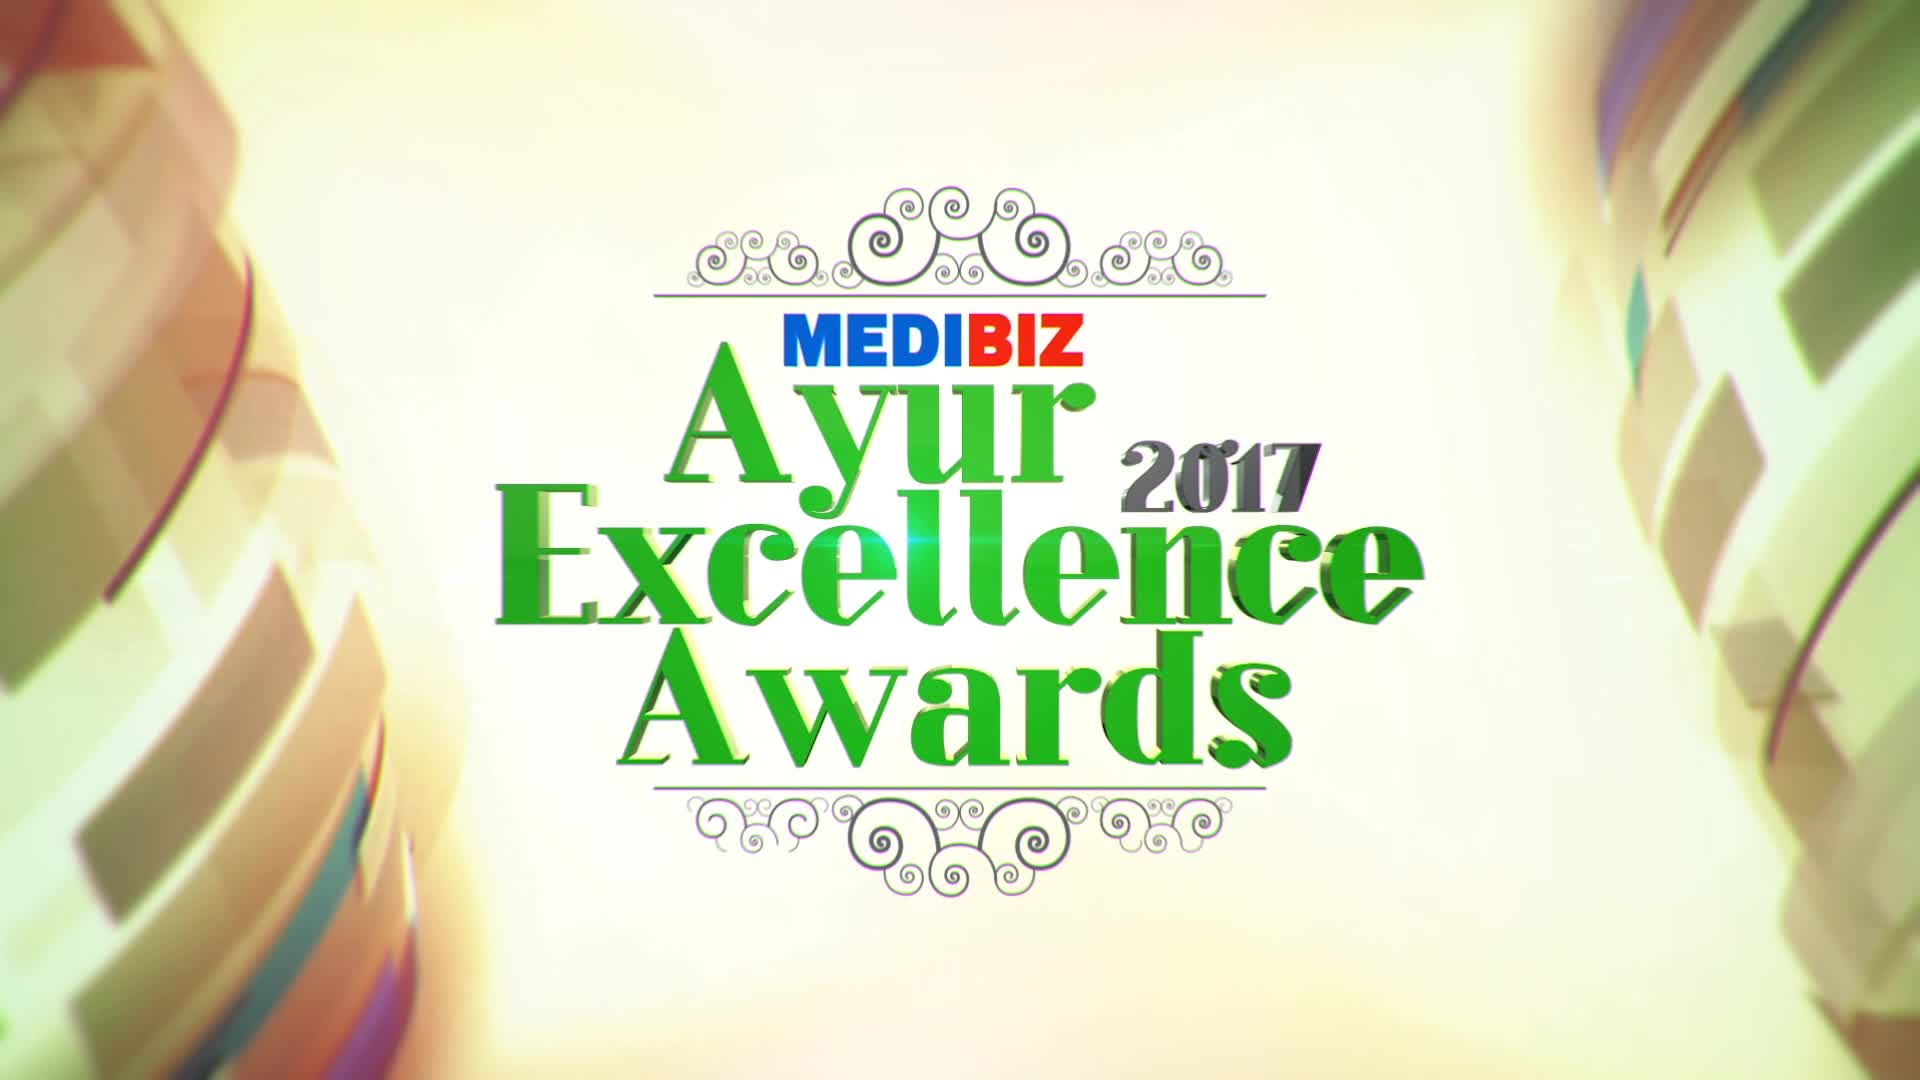 MEDI BIZ Ayur Excellence Award 2017 - Award Function